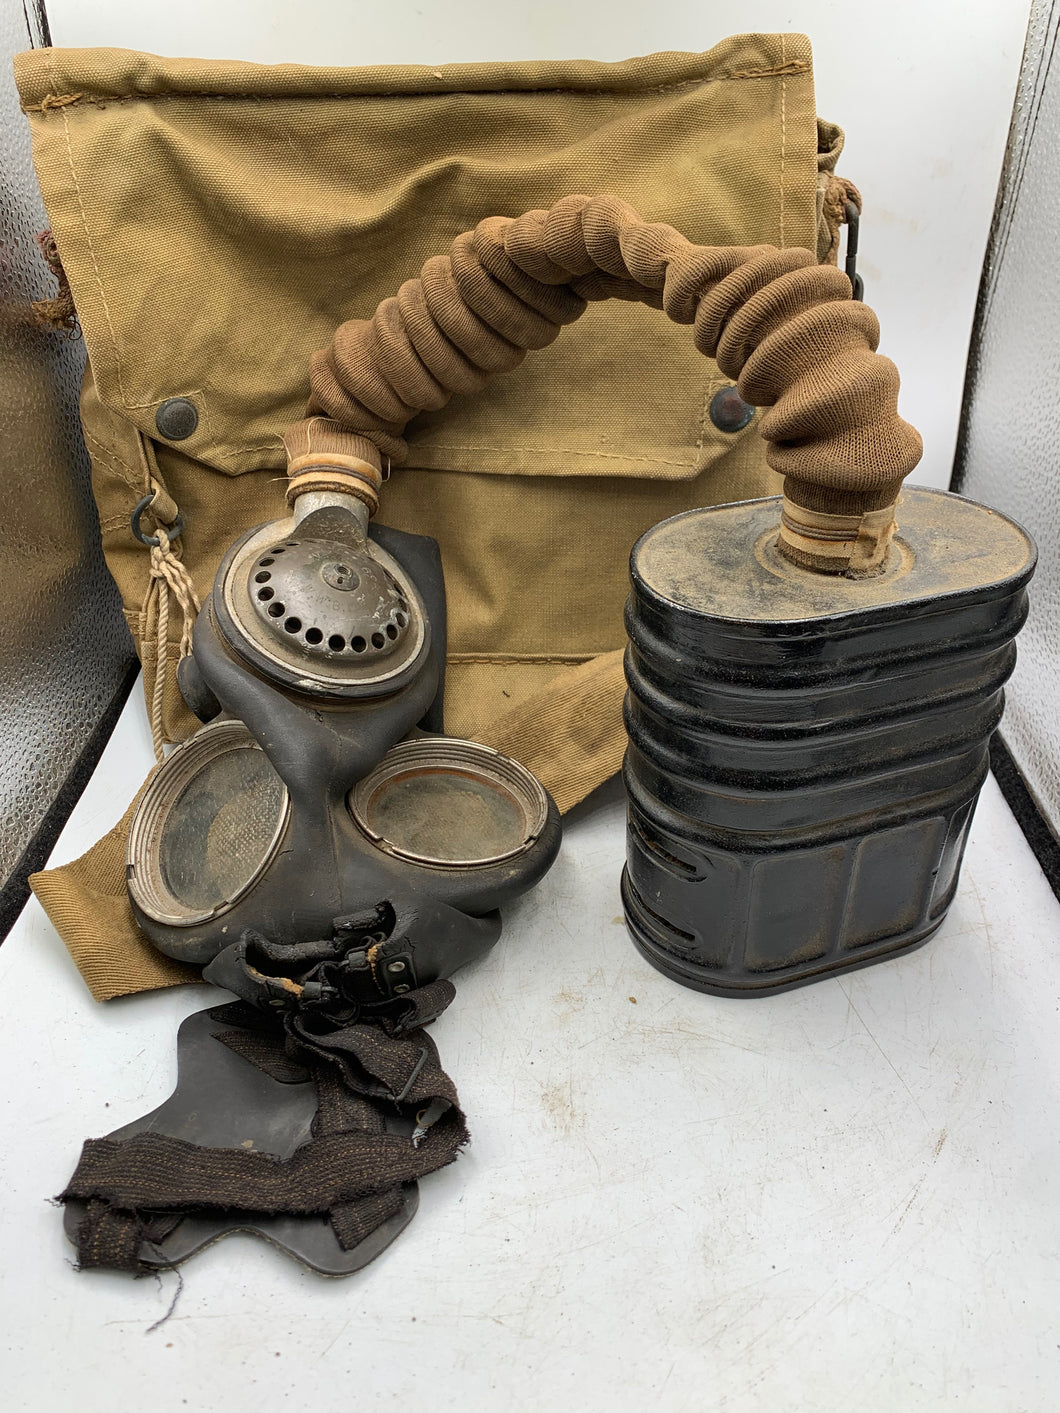 Original WW2 British Army Soldiers Gas Mask & Bag Set - 1939 Dated